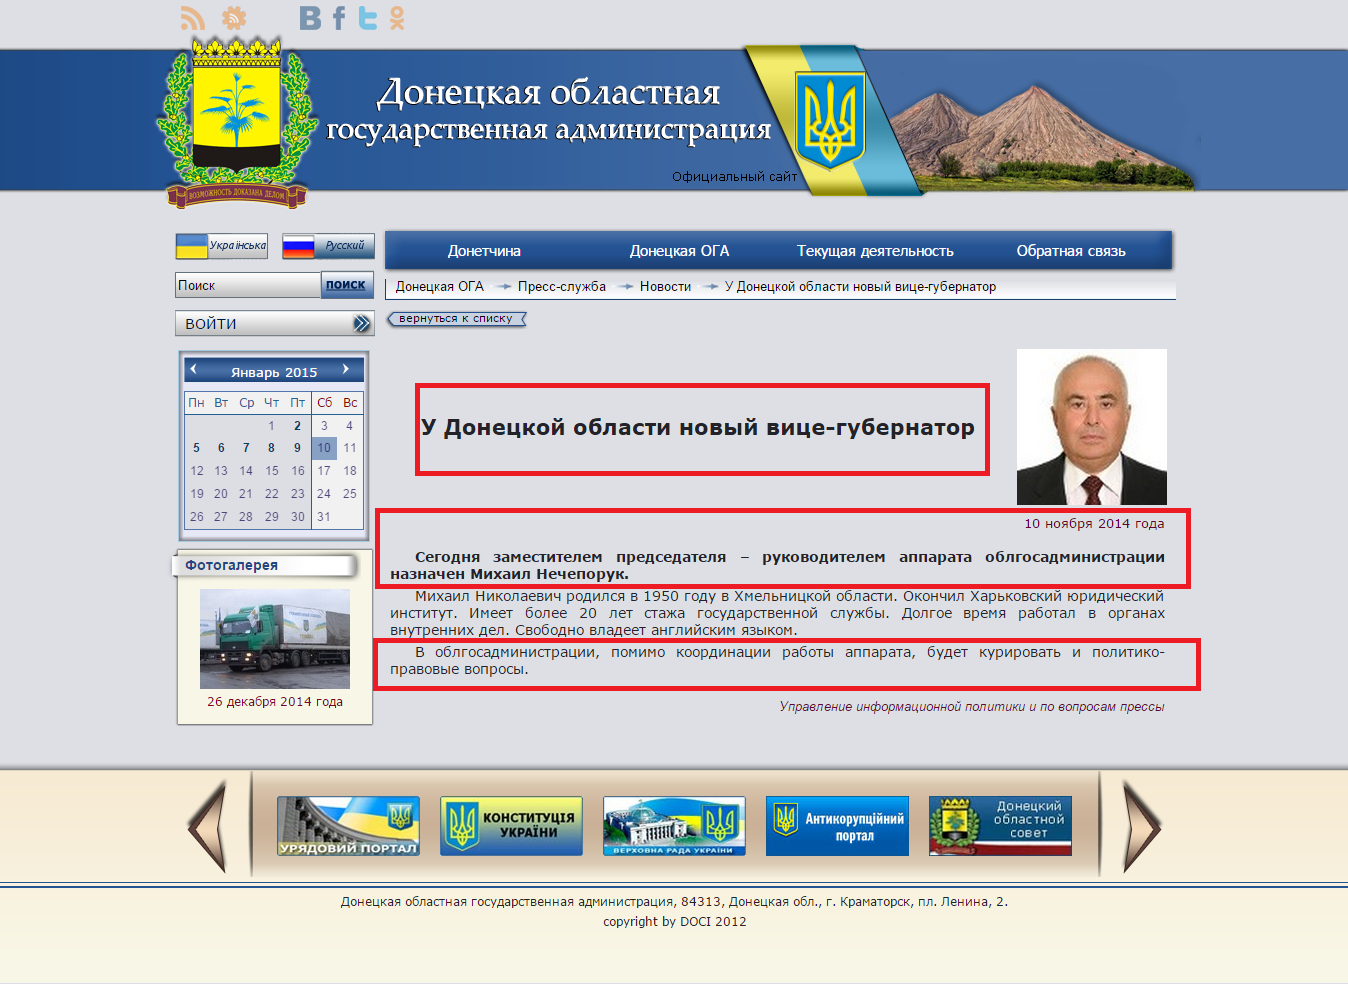 http://donoda.gov.ua/?lang=ru&sec=02.03.09&iface=Public&cmd=view&args=id:22013